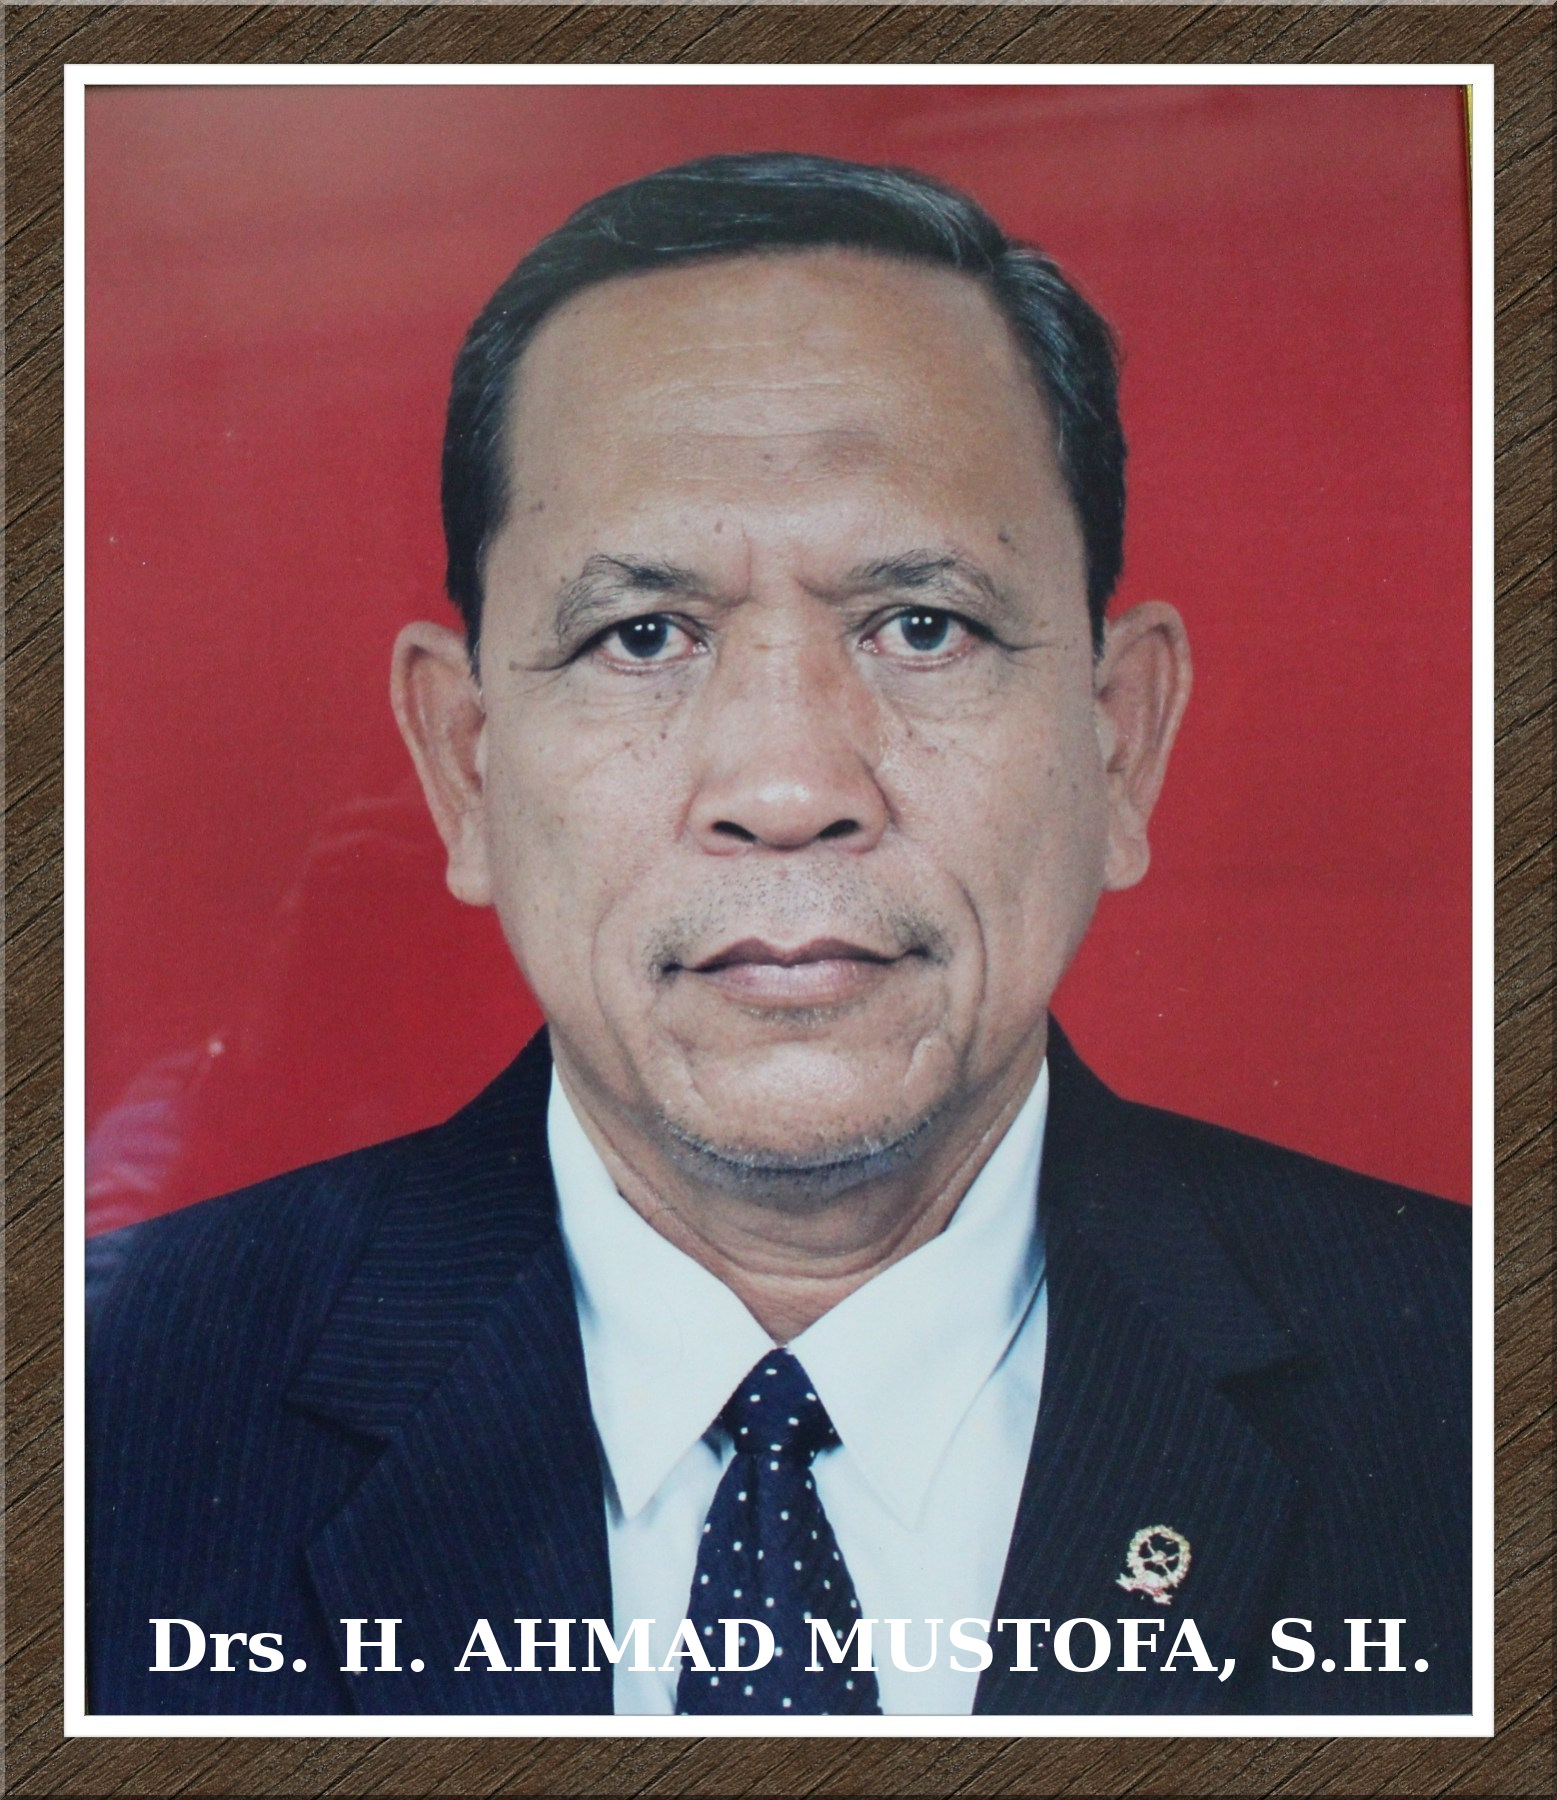 Drs. H. AHMAD MUSTOFA S